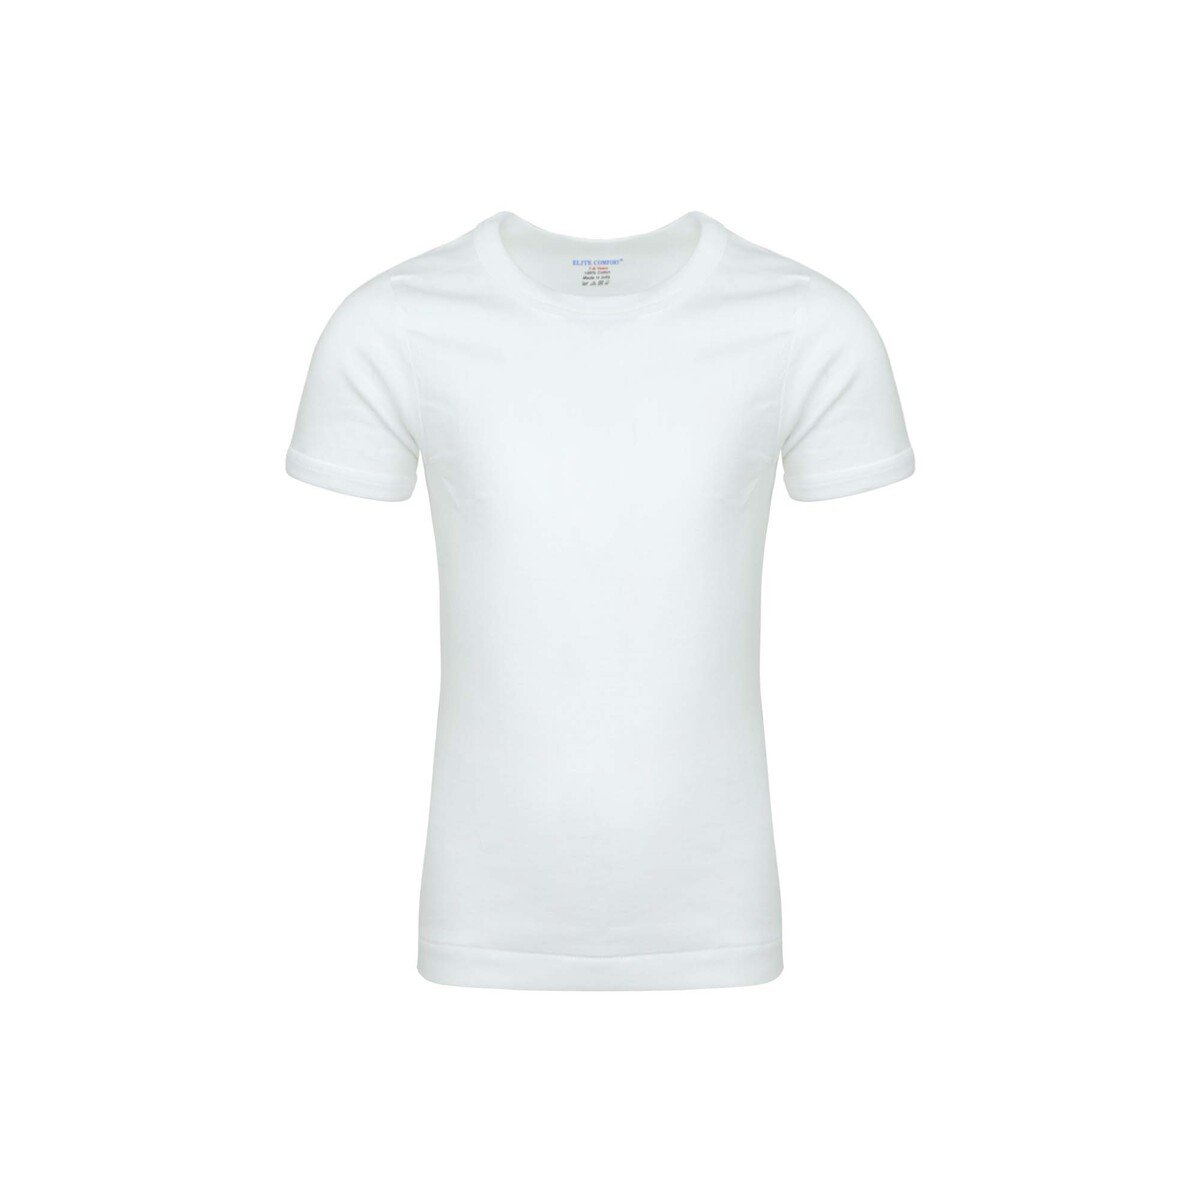 Elite Comfort Boys T.Shirt White 3Pcs Pack 5-6Y